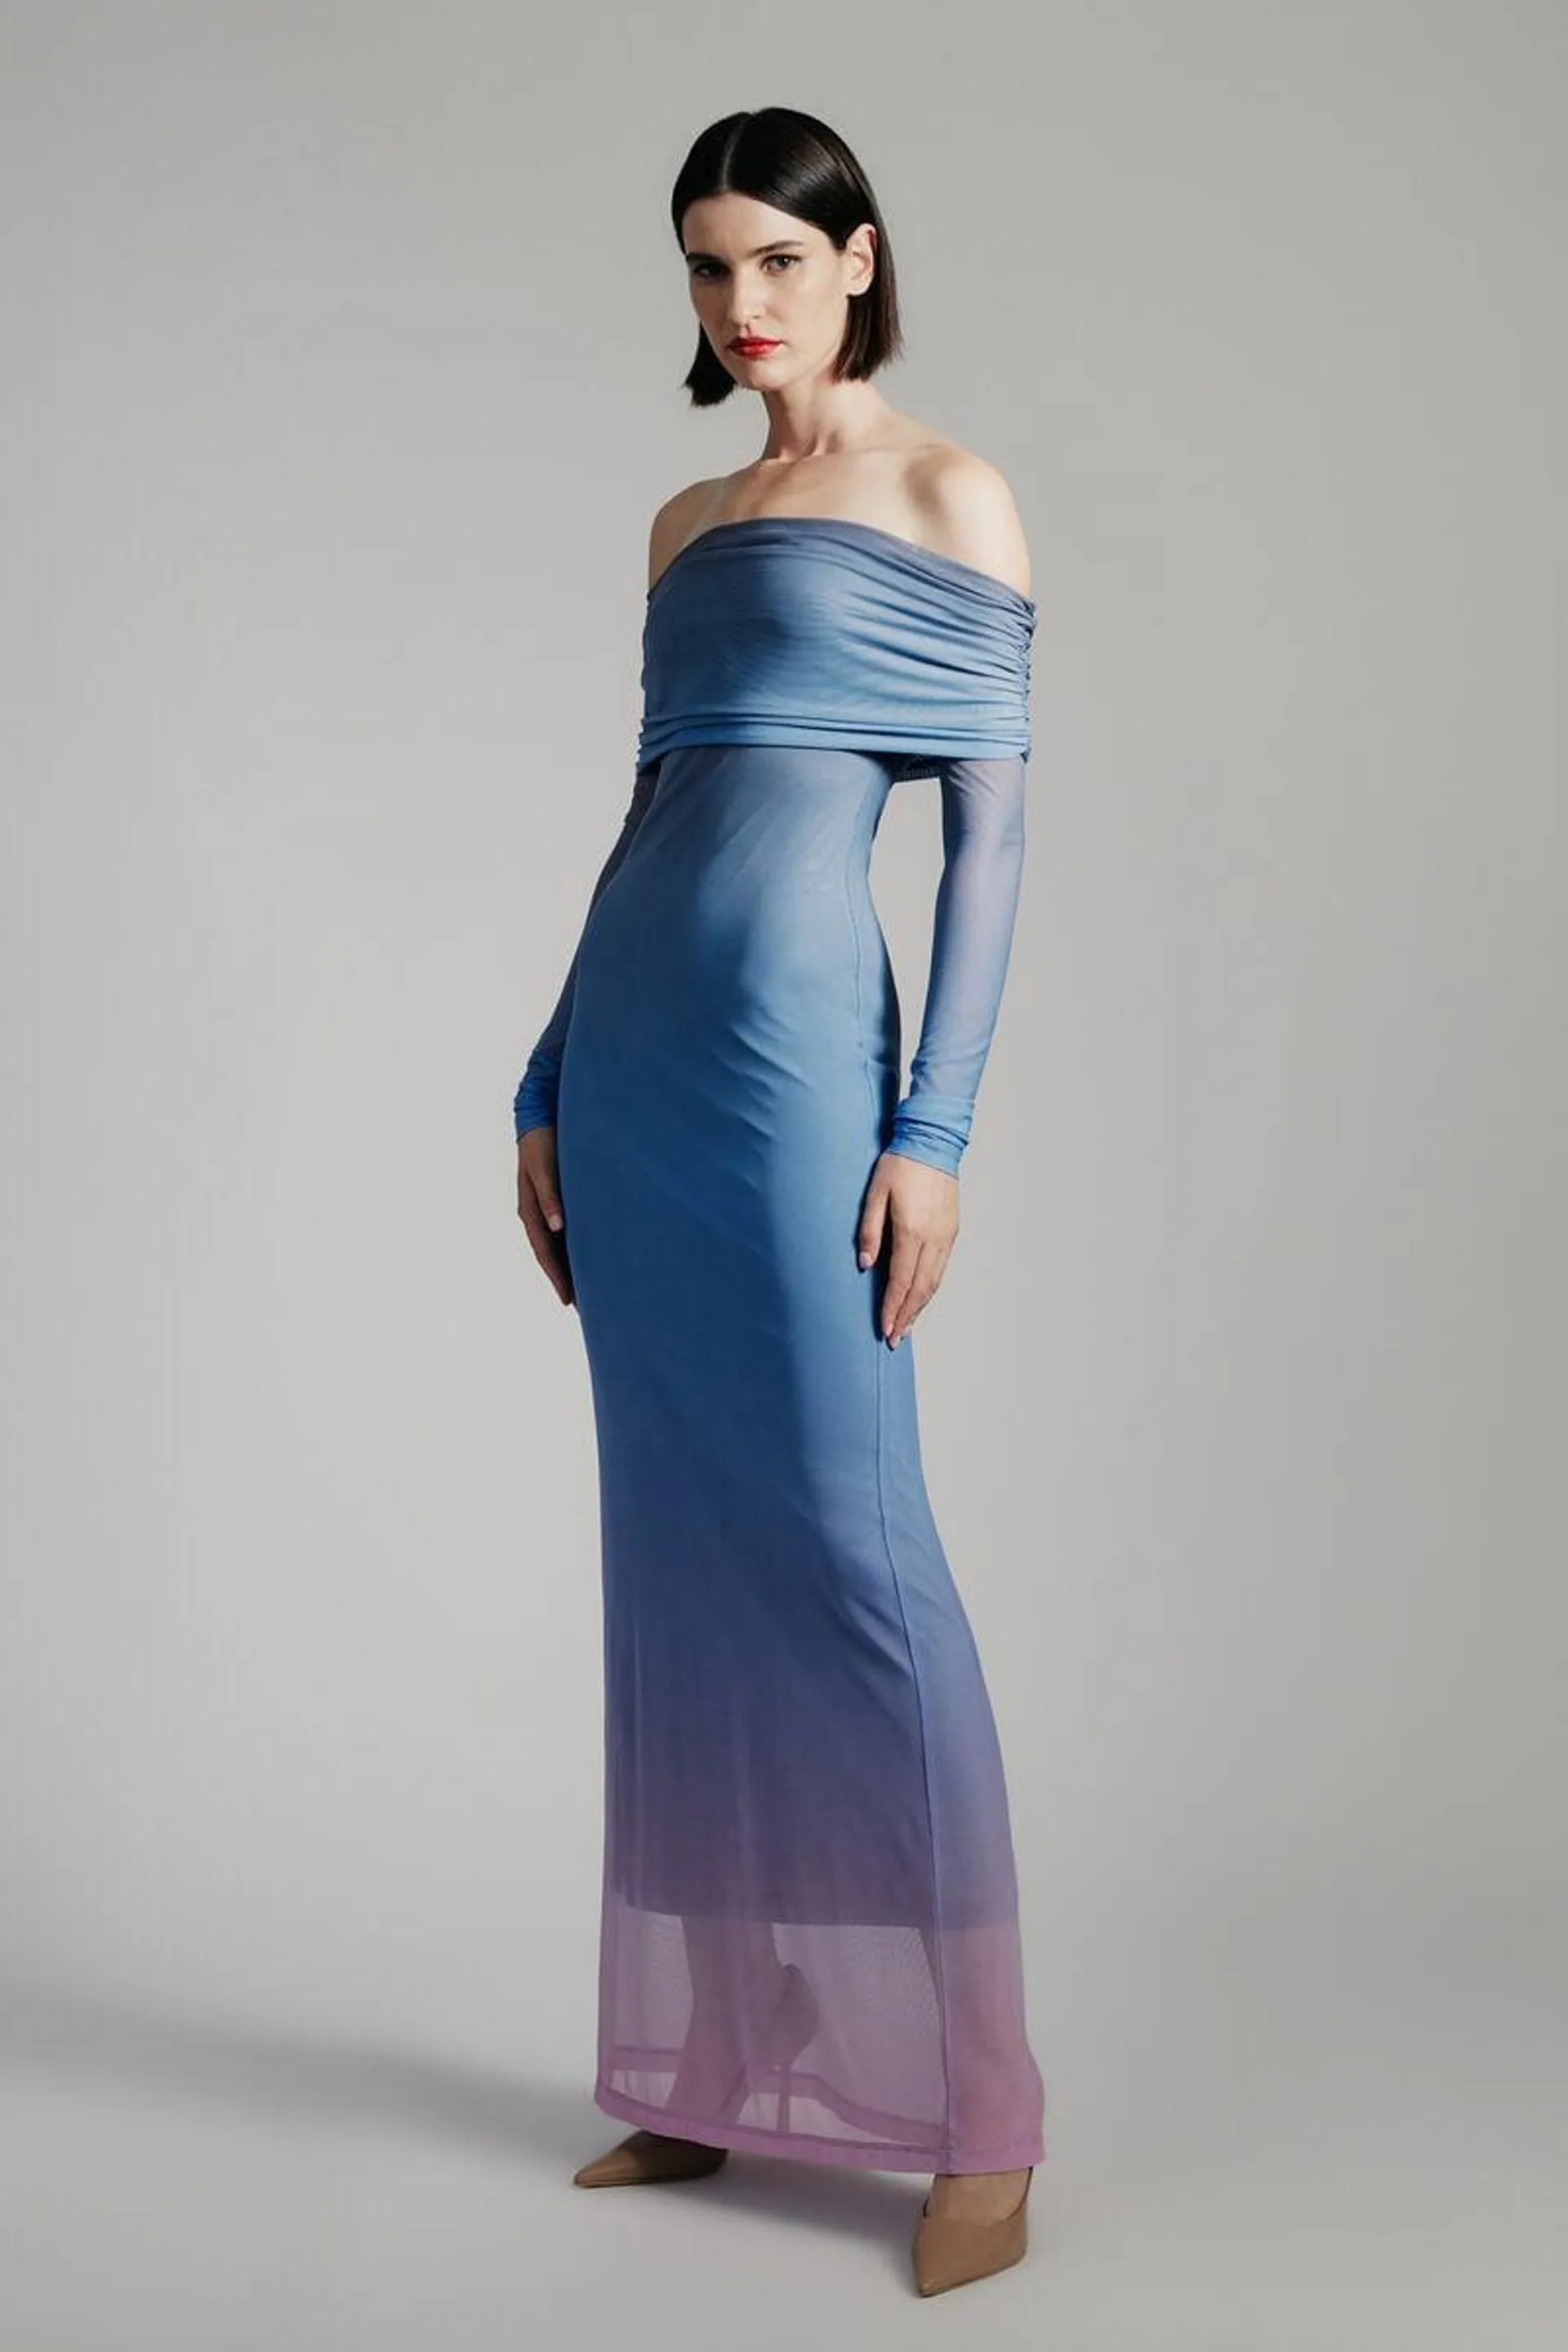 saphia mesh maxi dress in blue/pink